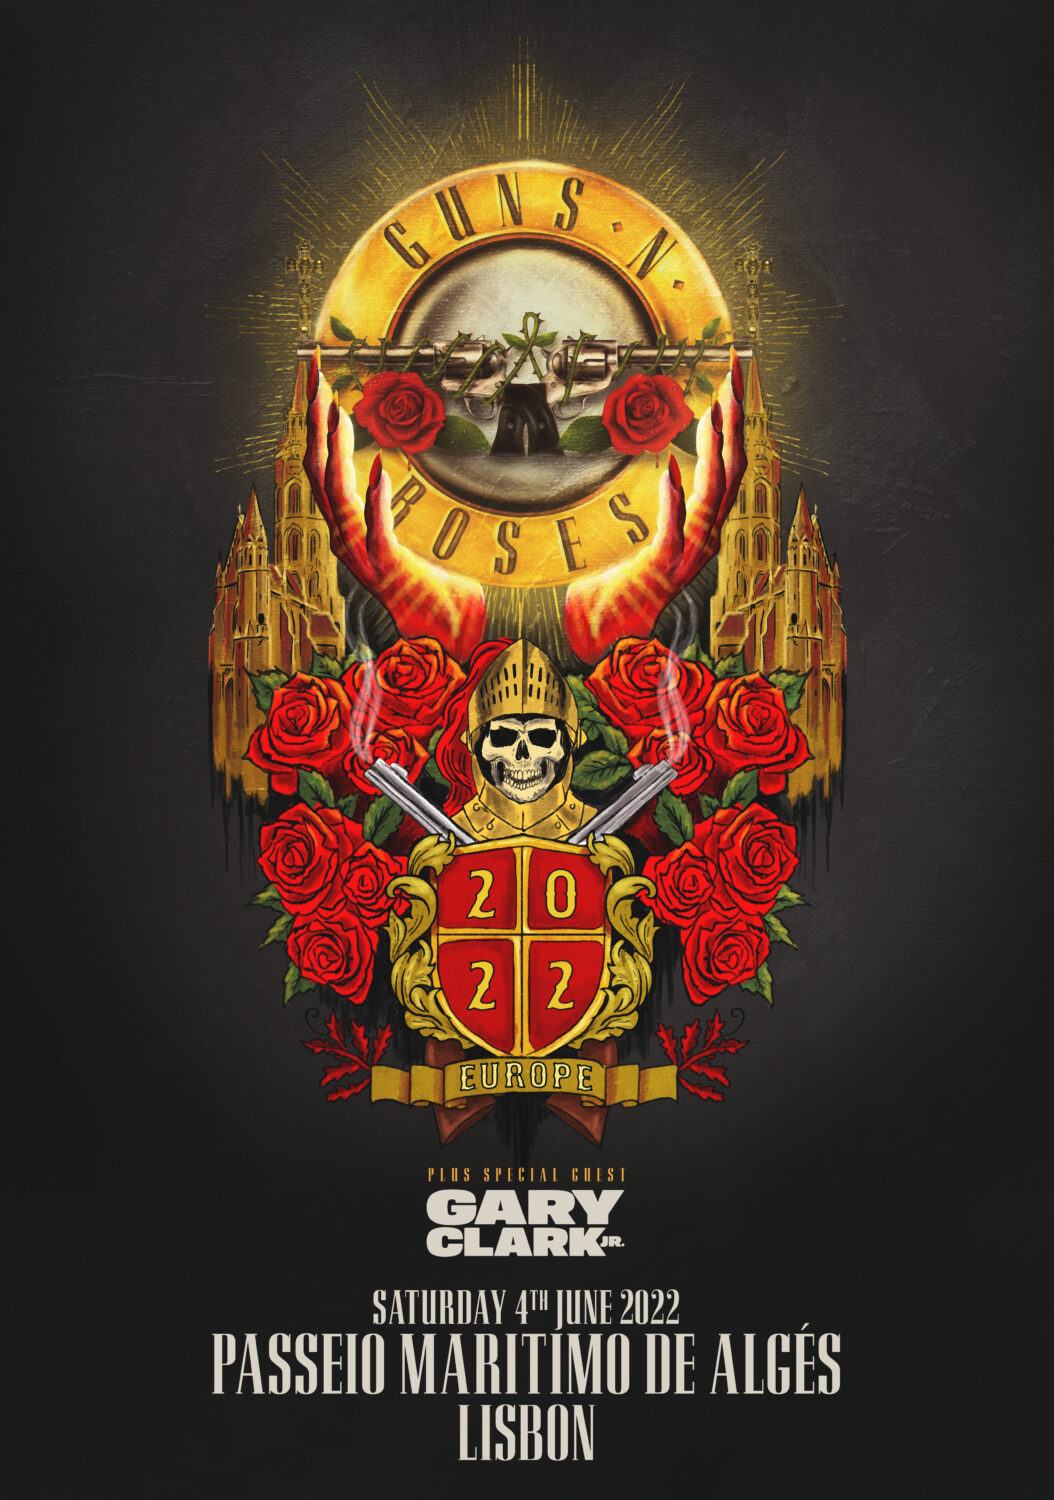 Guns n Roses concert poster print A4 size 